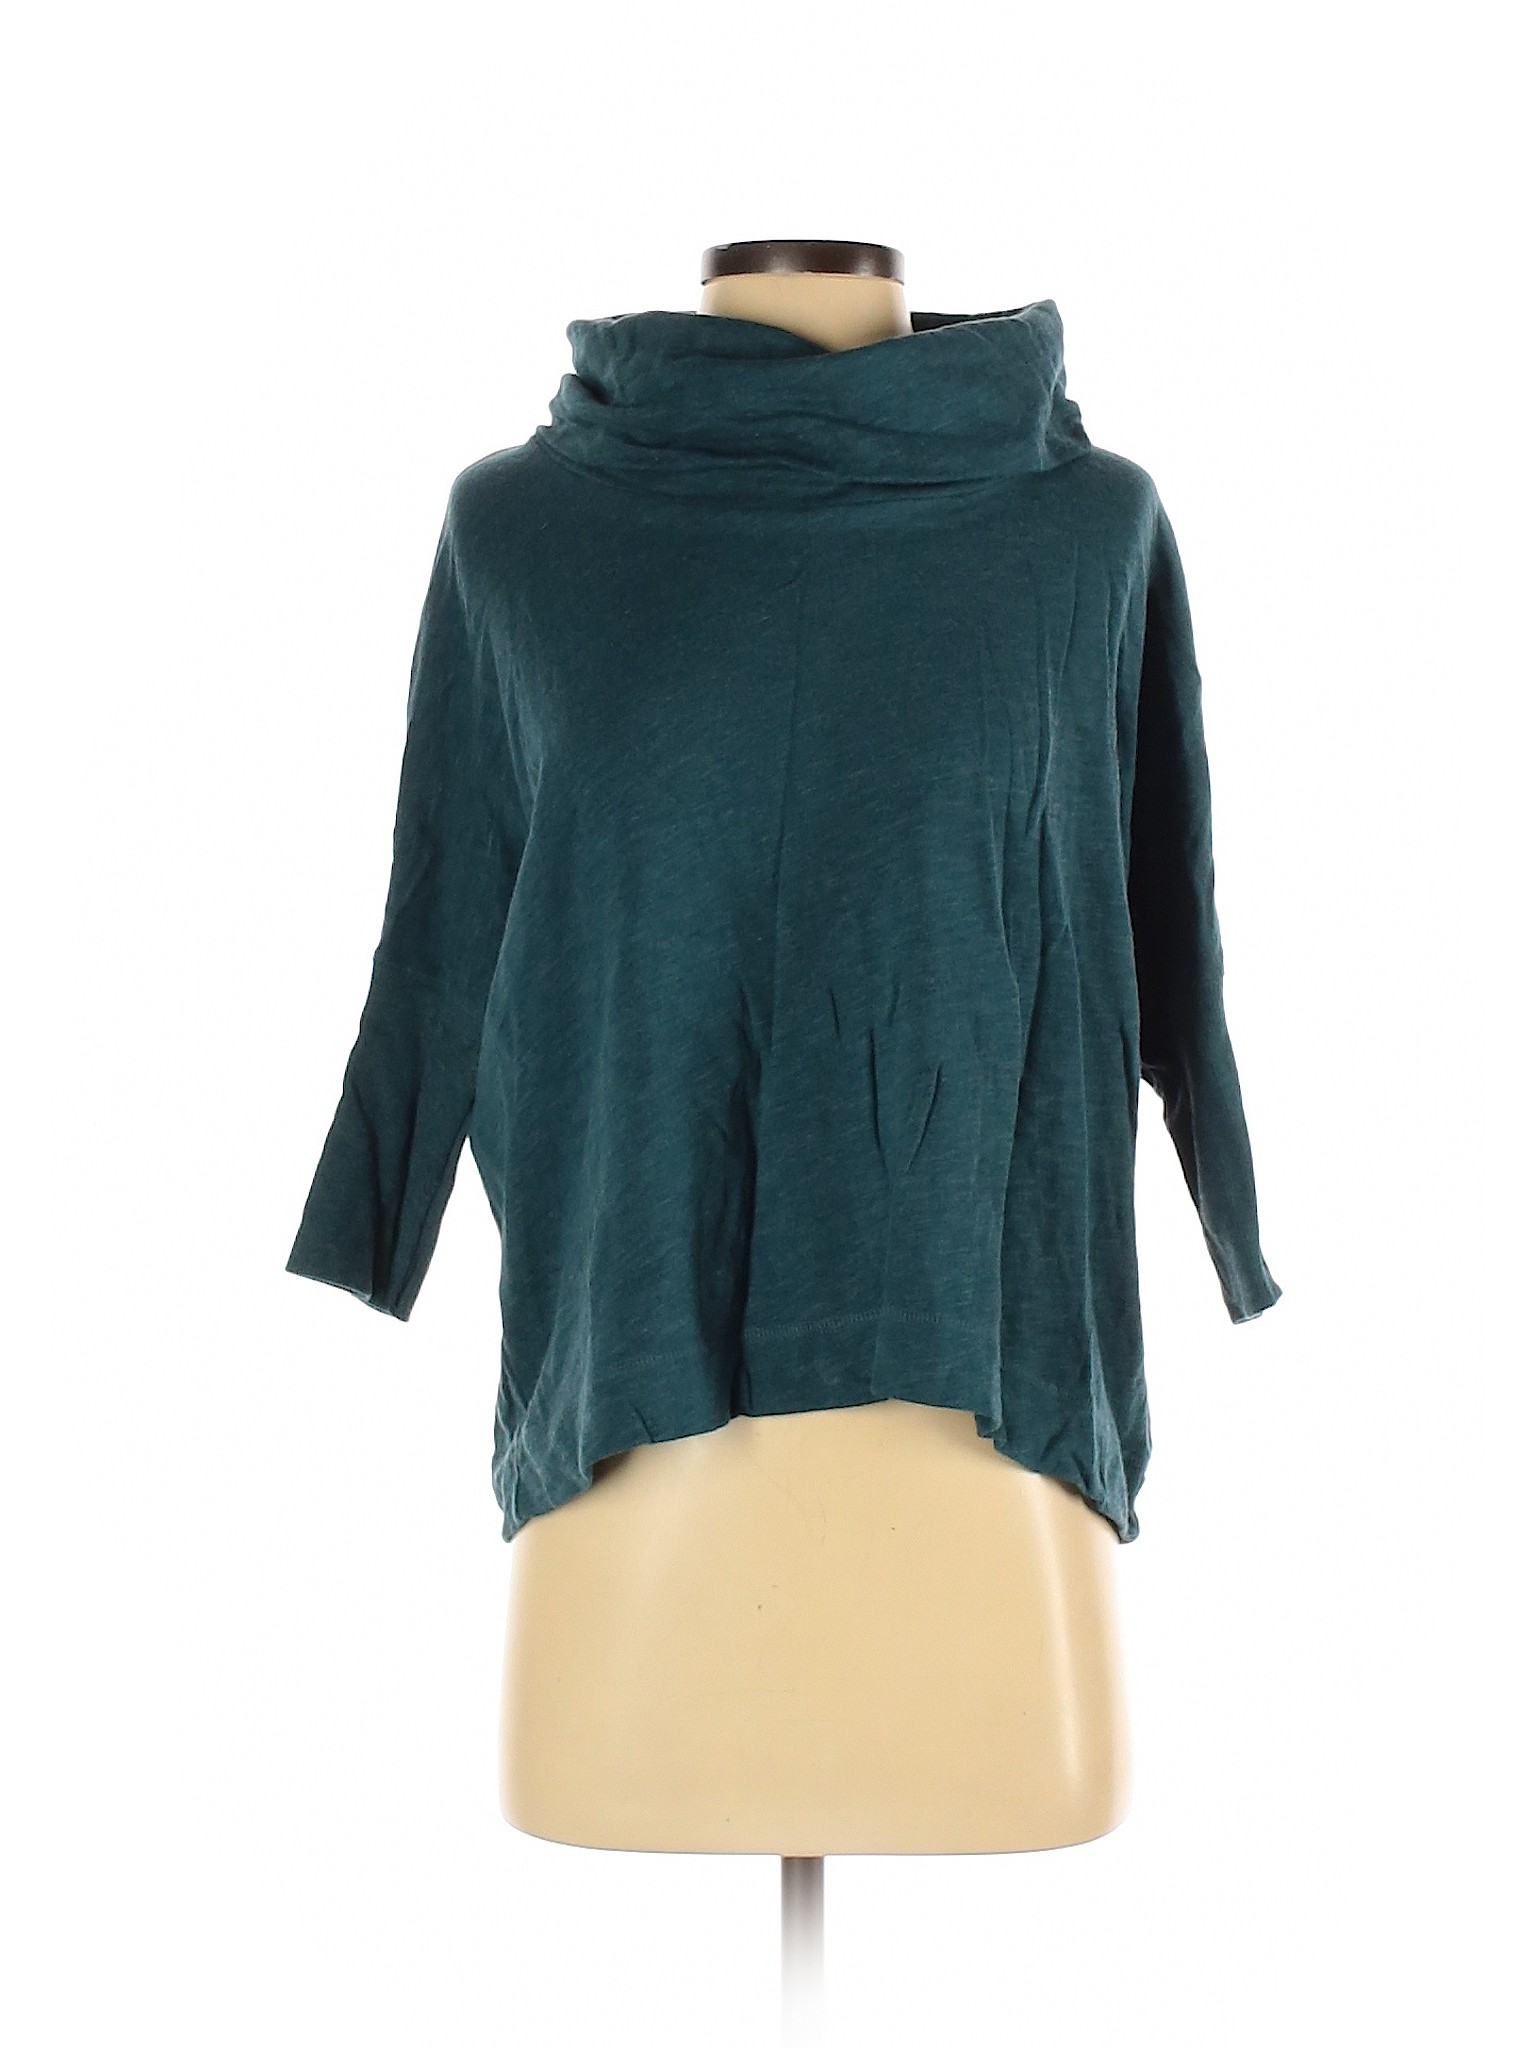 Old Navy Women Green Sweatshirt XS | eBay